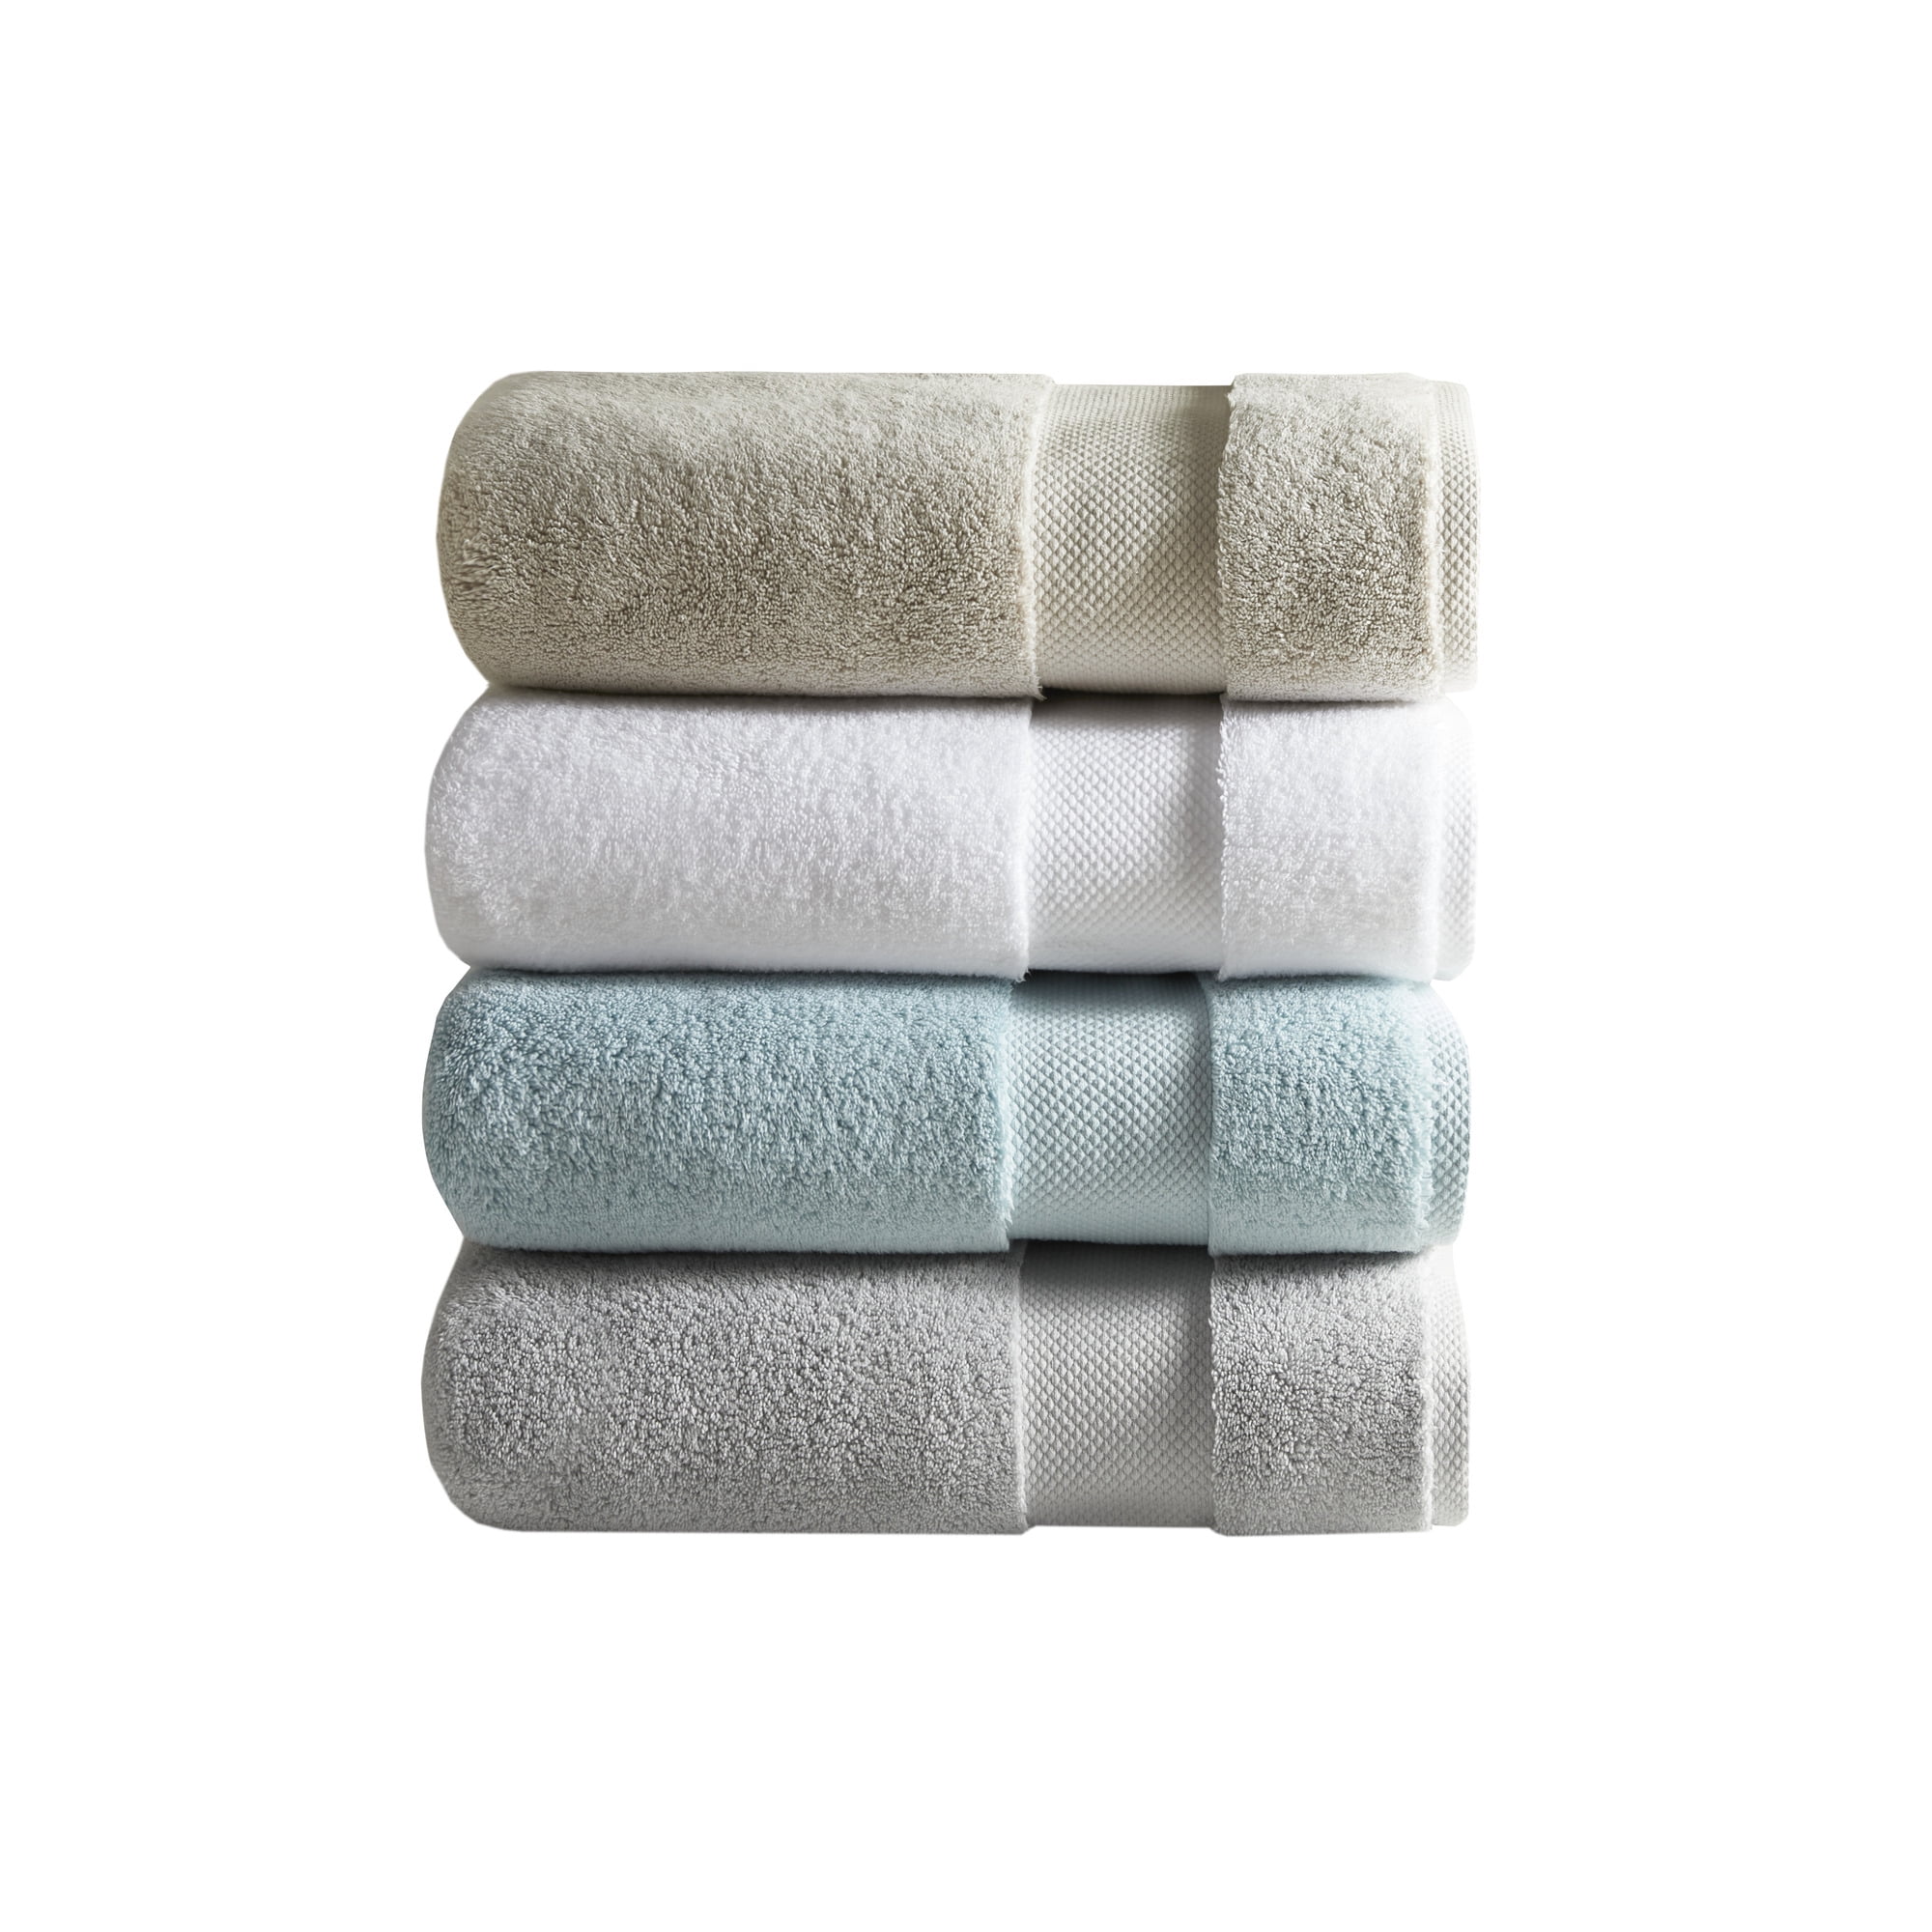 Home Sweet Home Dreams Inc 100% Cotton 6-Piece Hotel Quality Towel Set -  Super Soft, and High Absorbent Bath Towel Set - 650 GSM